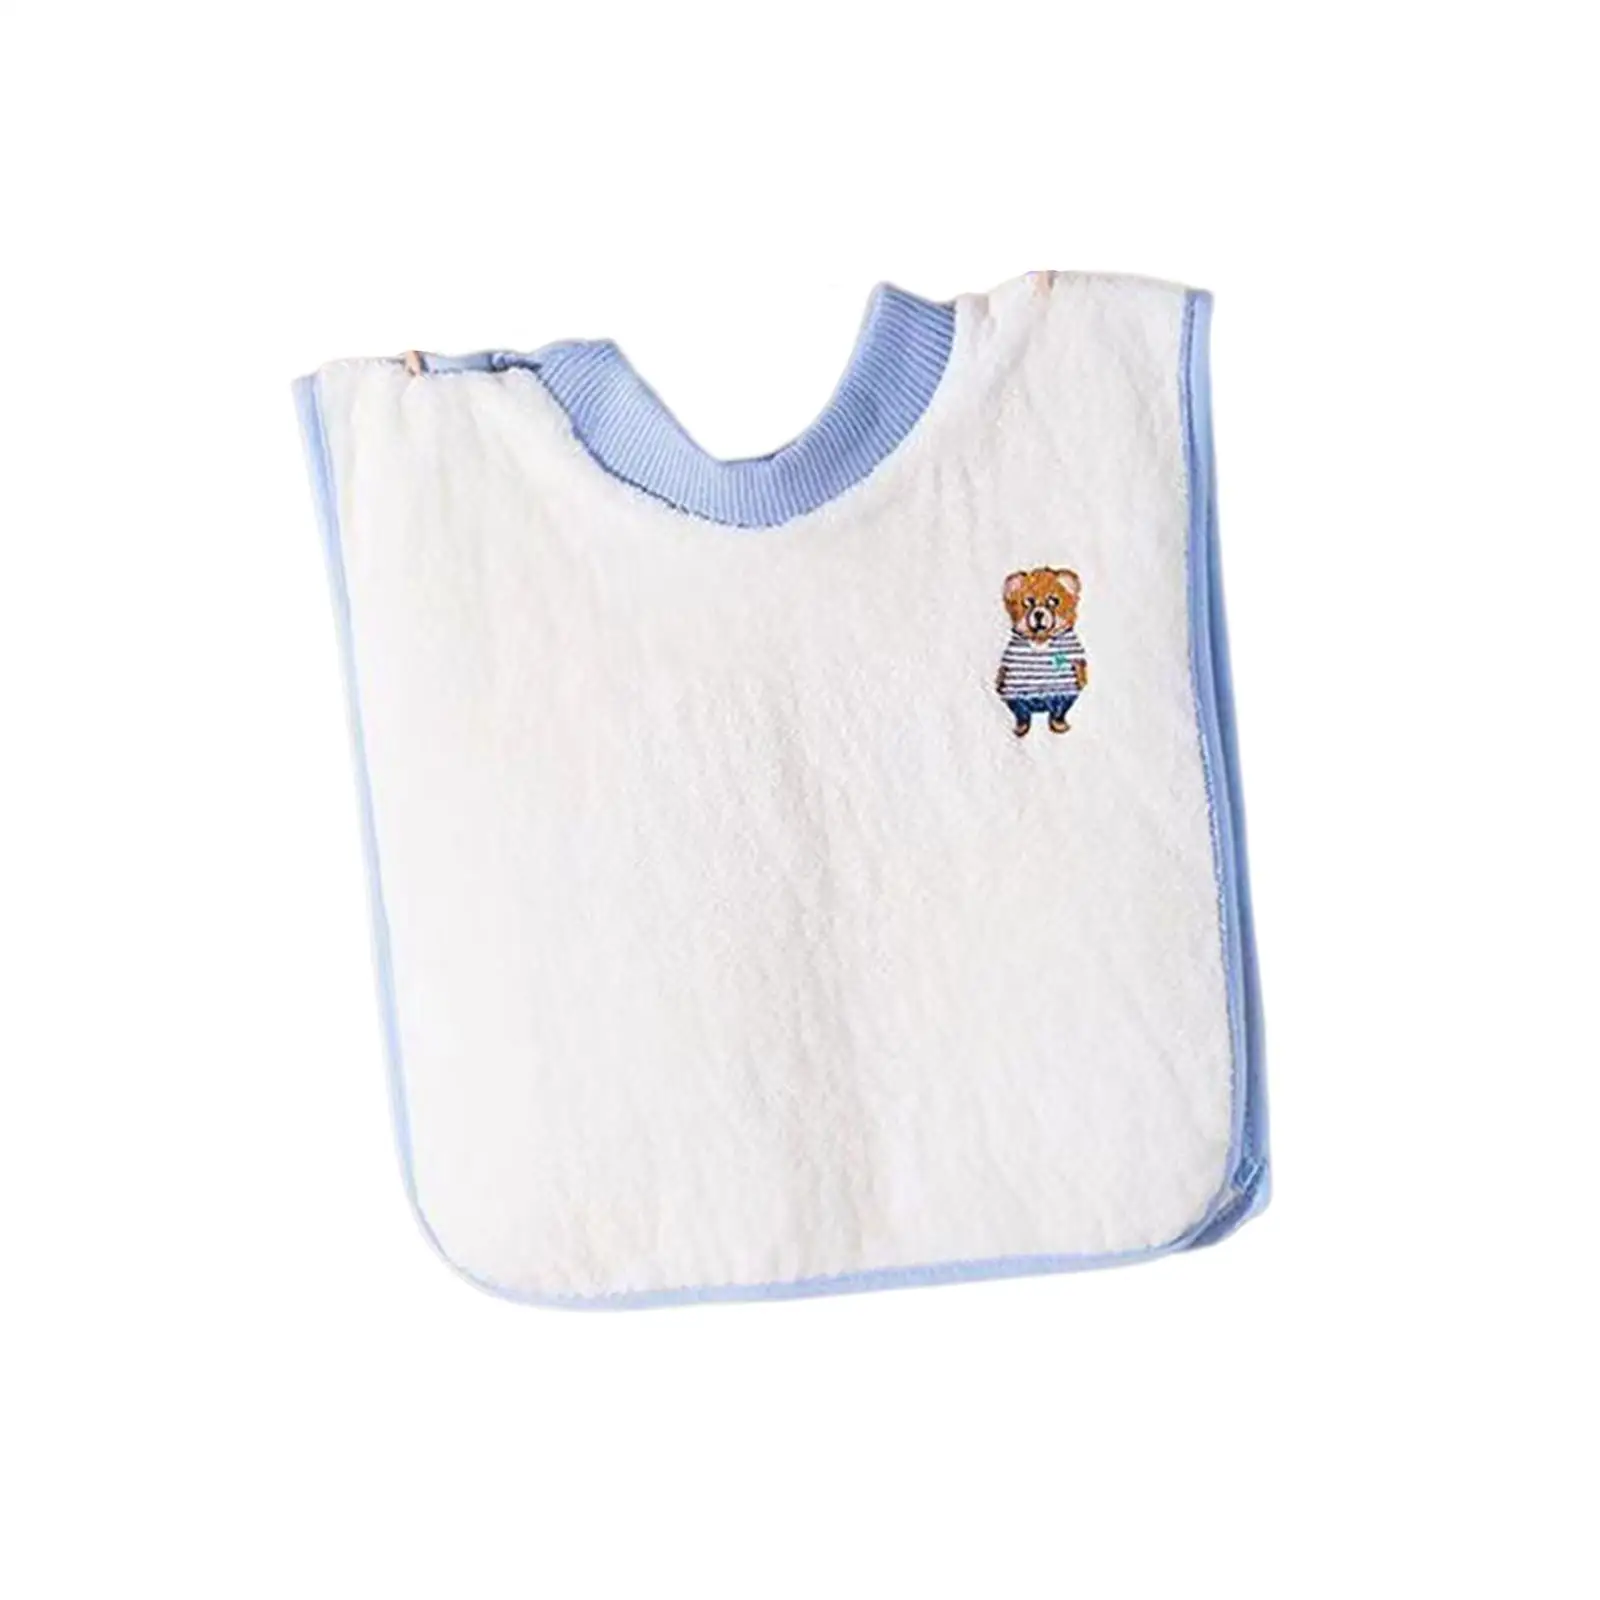 Kid Bib Keep Kids Clothes Dry for 1-6 Years Kids Saliva Towels